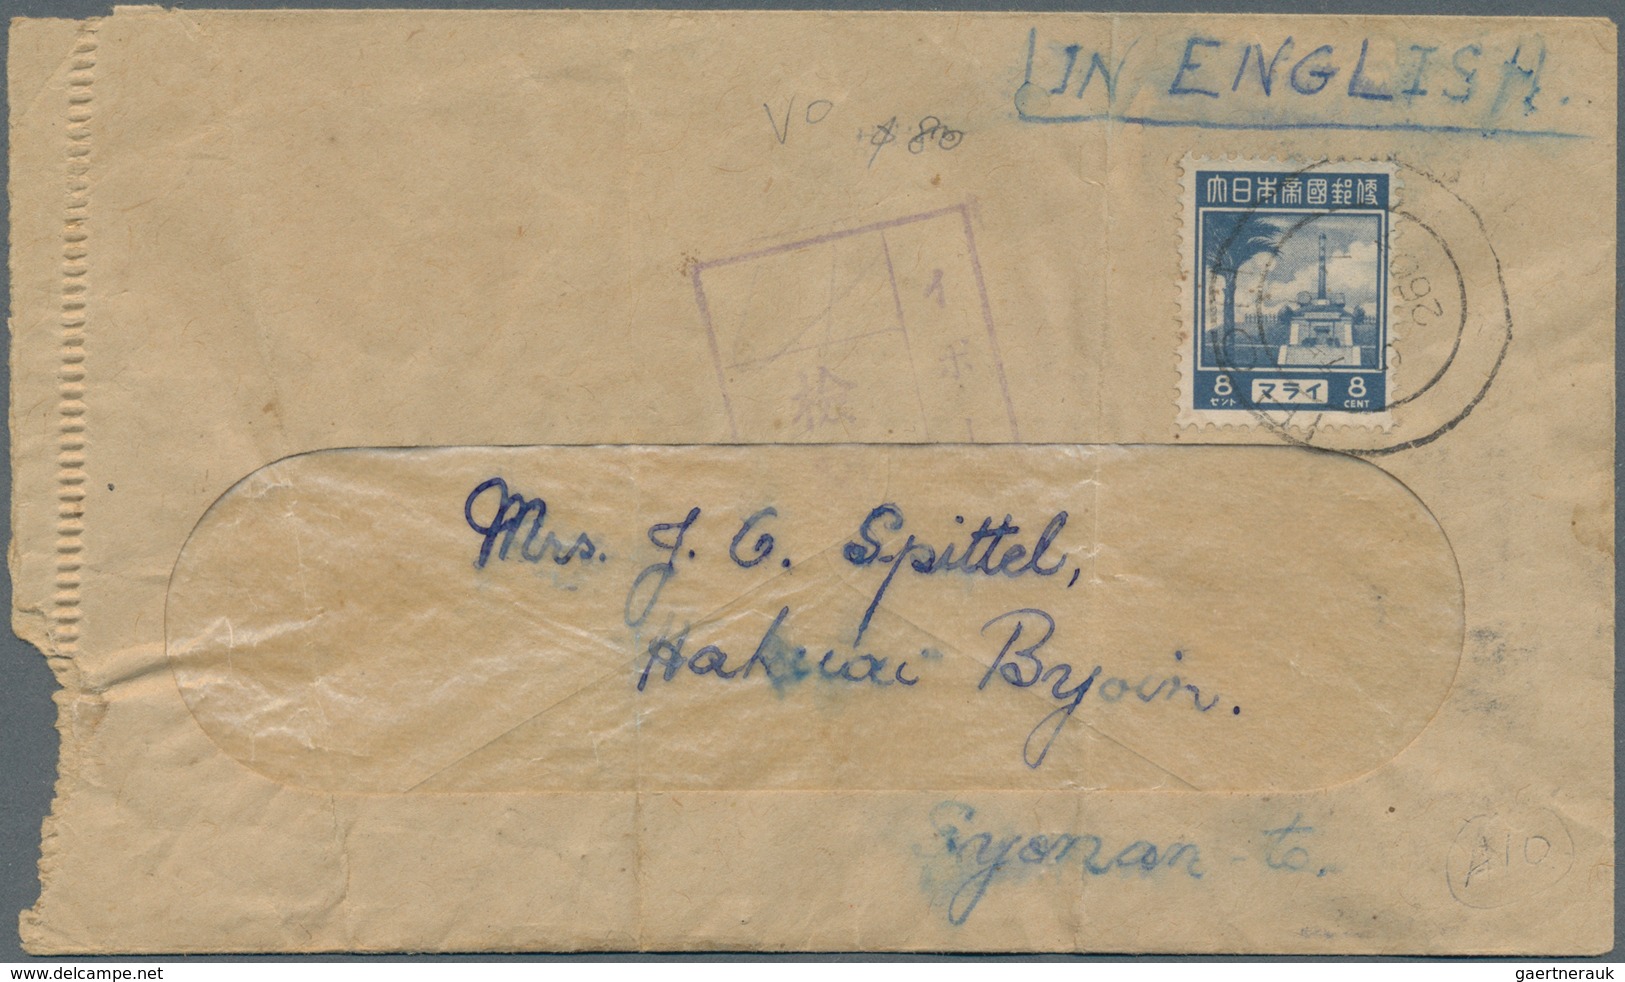 Japanische Besetzung  WK II - Malaya: 1942/45, covers/used stationery (13) used Malacca, Kulim, Pena